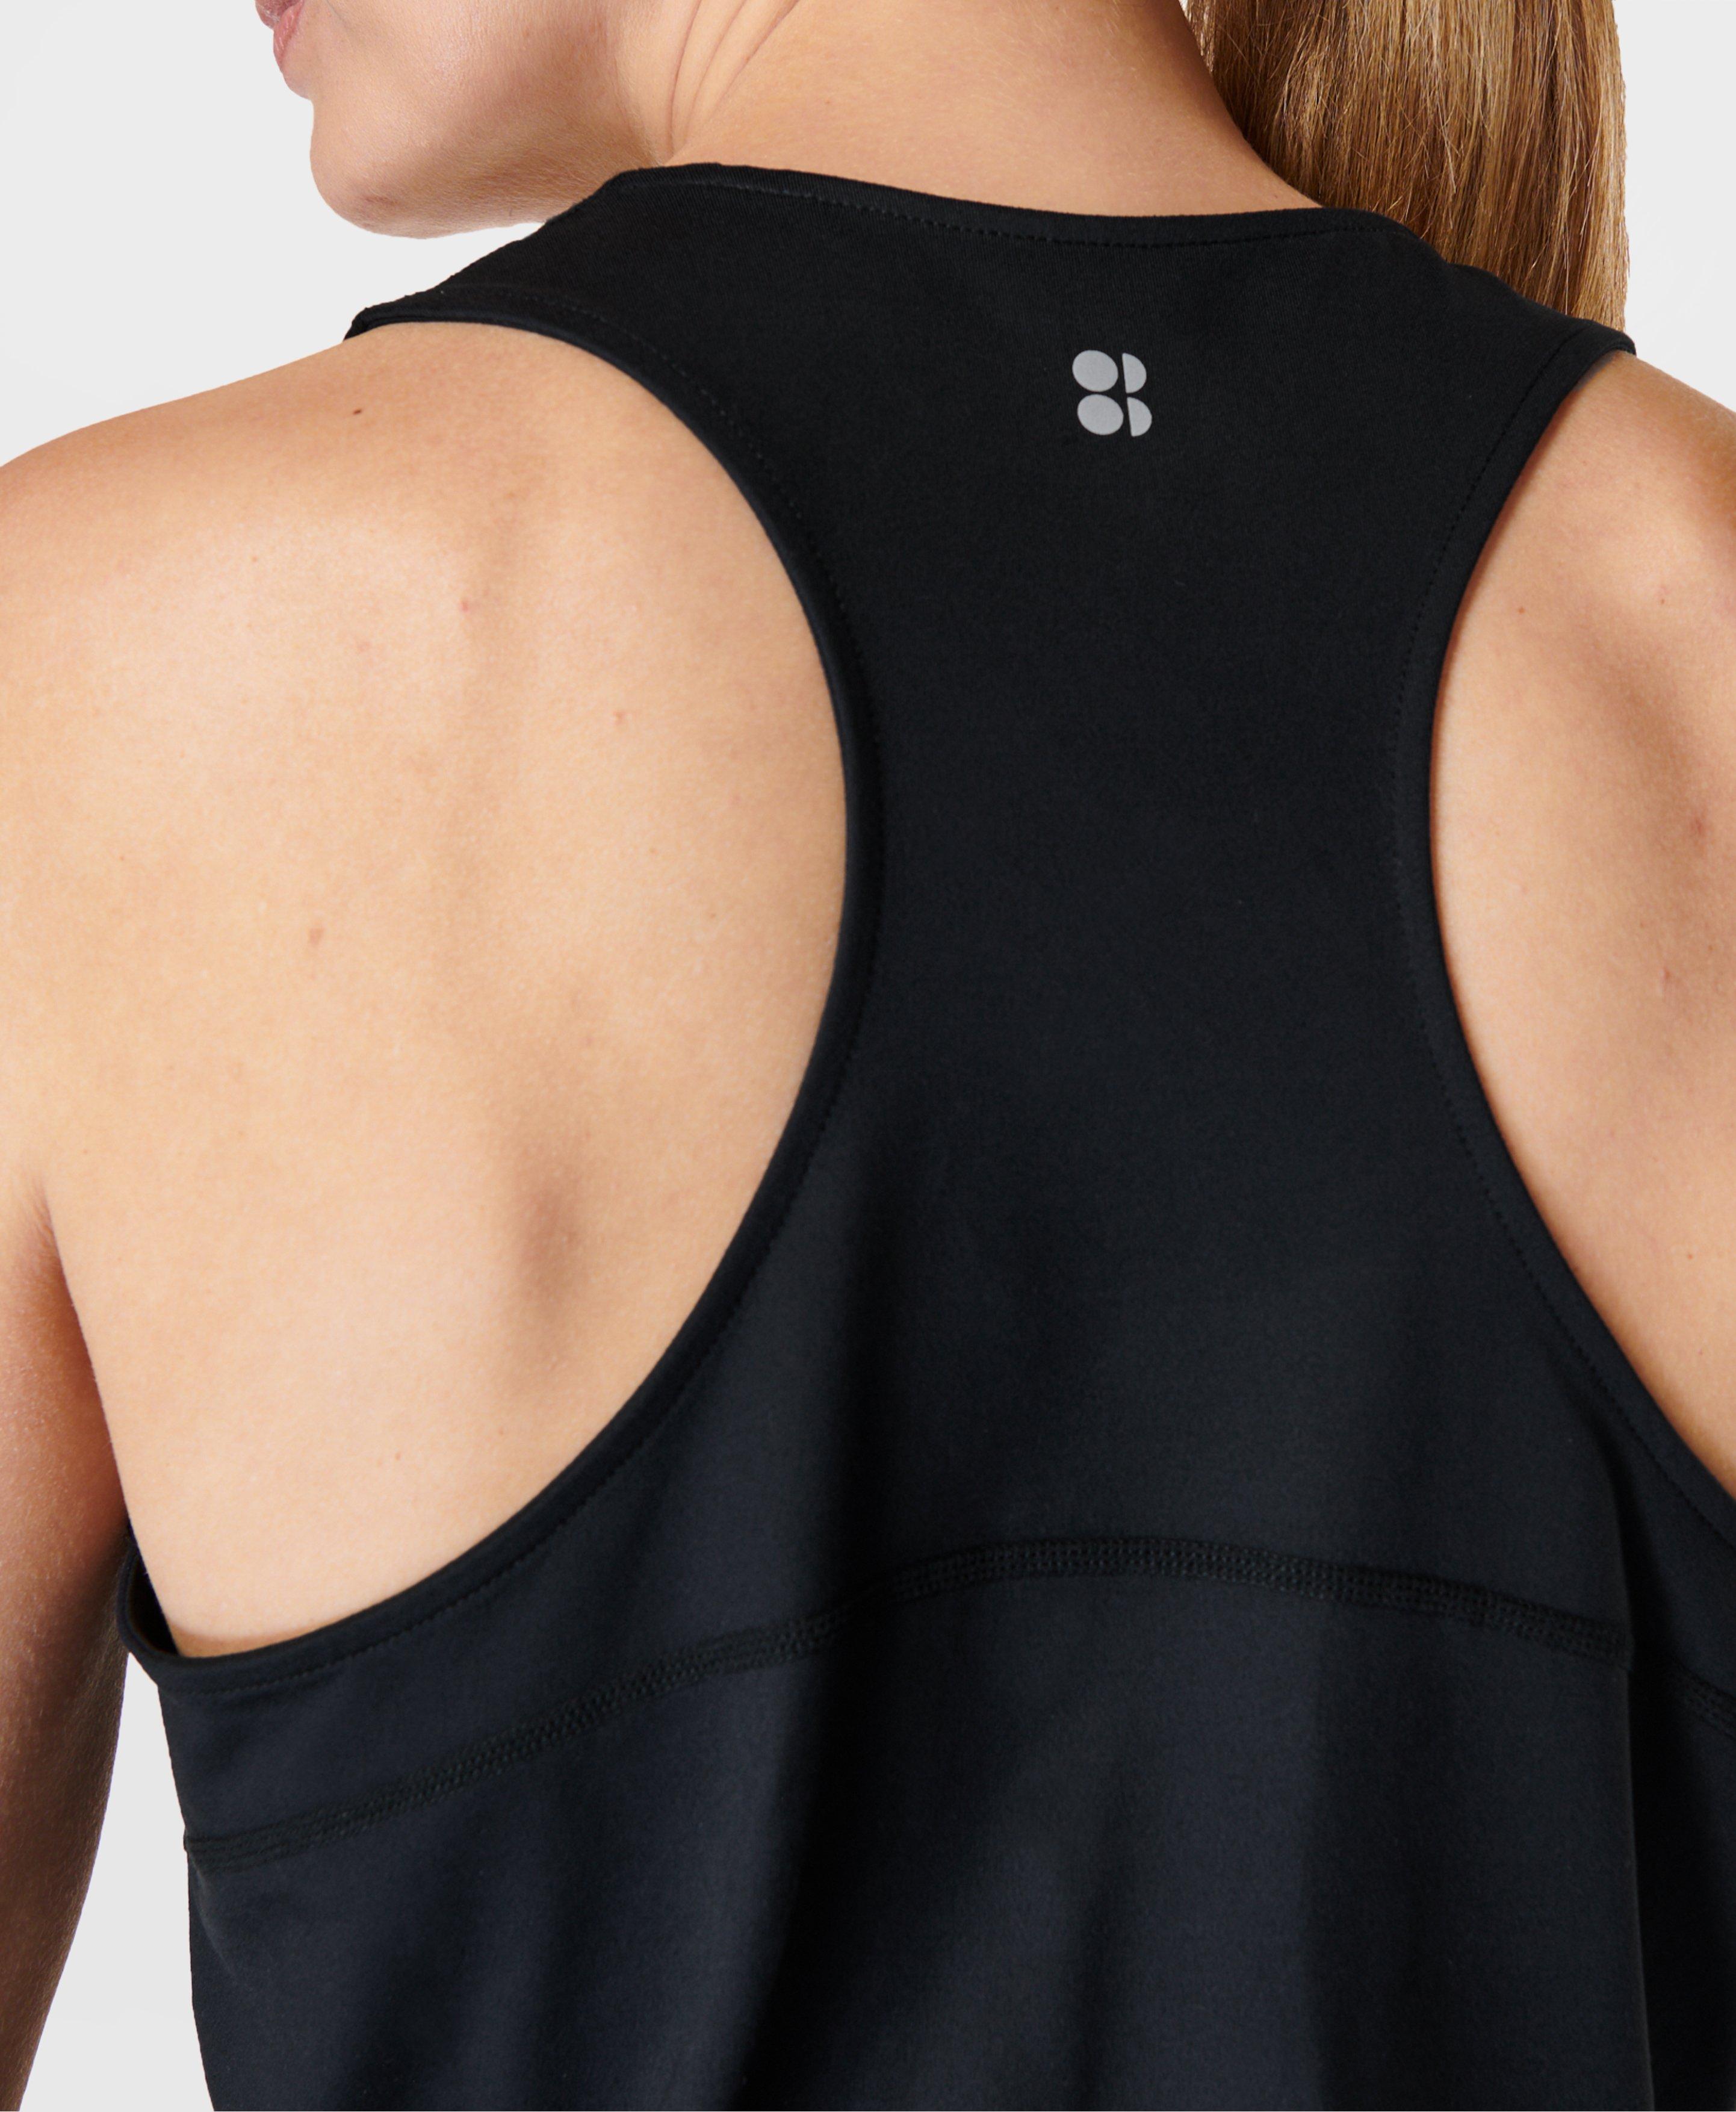 Girl's Solid Black Yoga Vest Tank Top, SHOP NOW